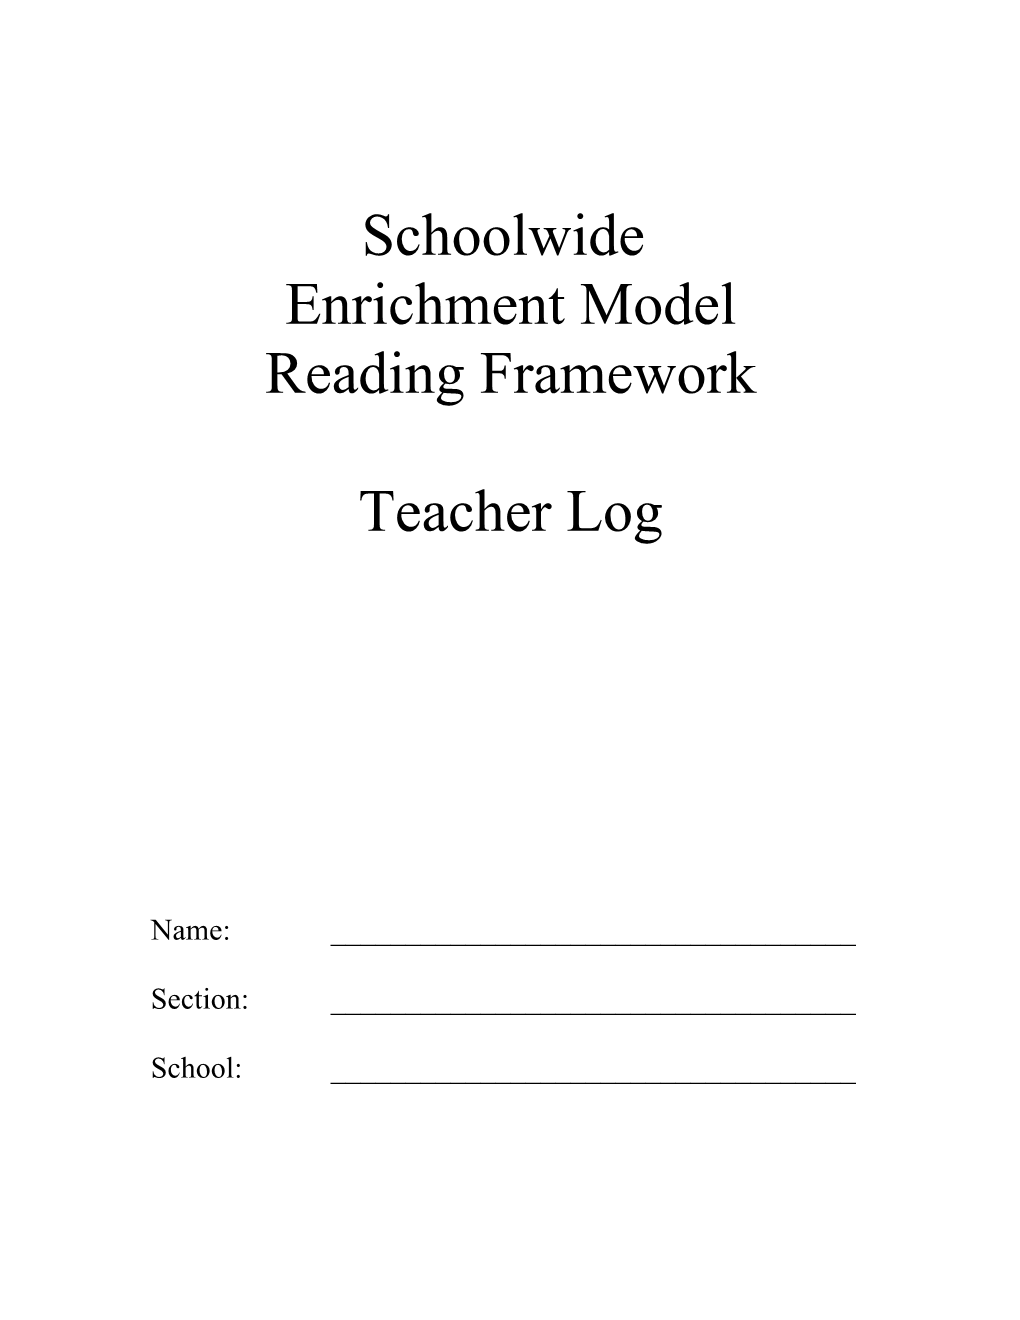 Schoolwide Enrichment Model-Reading